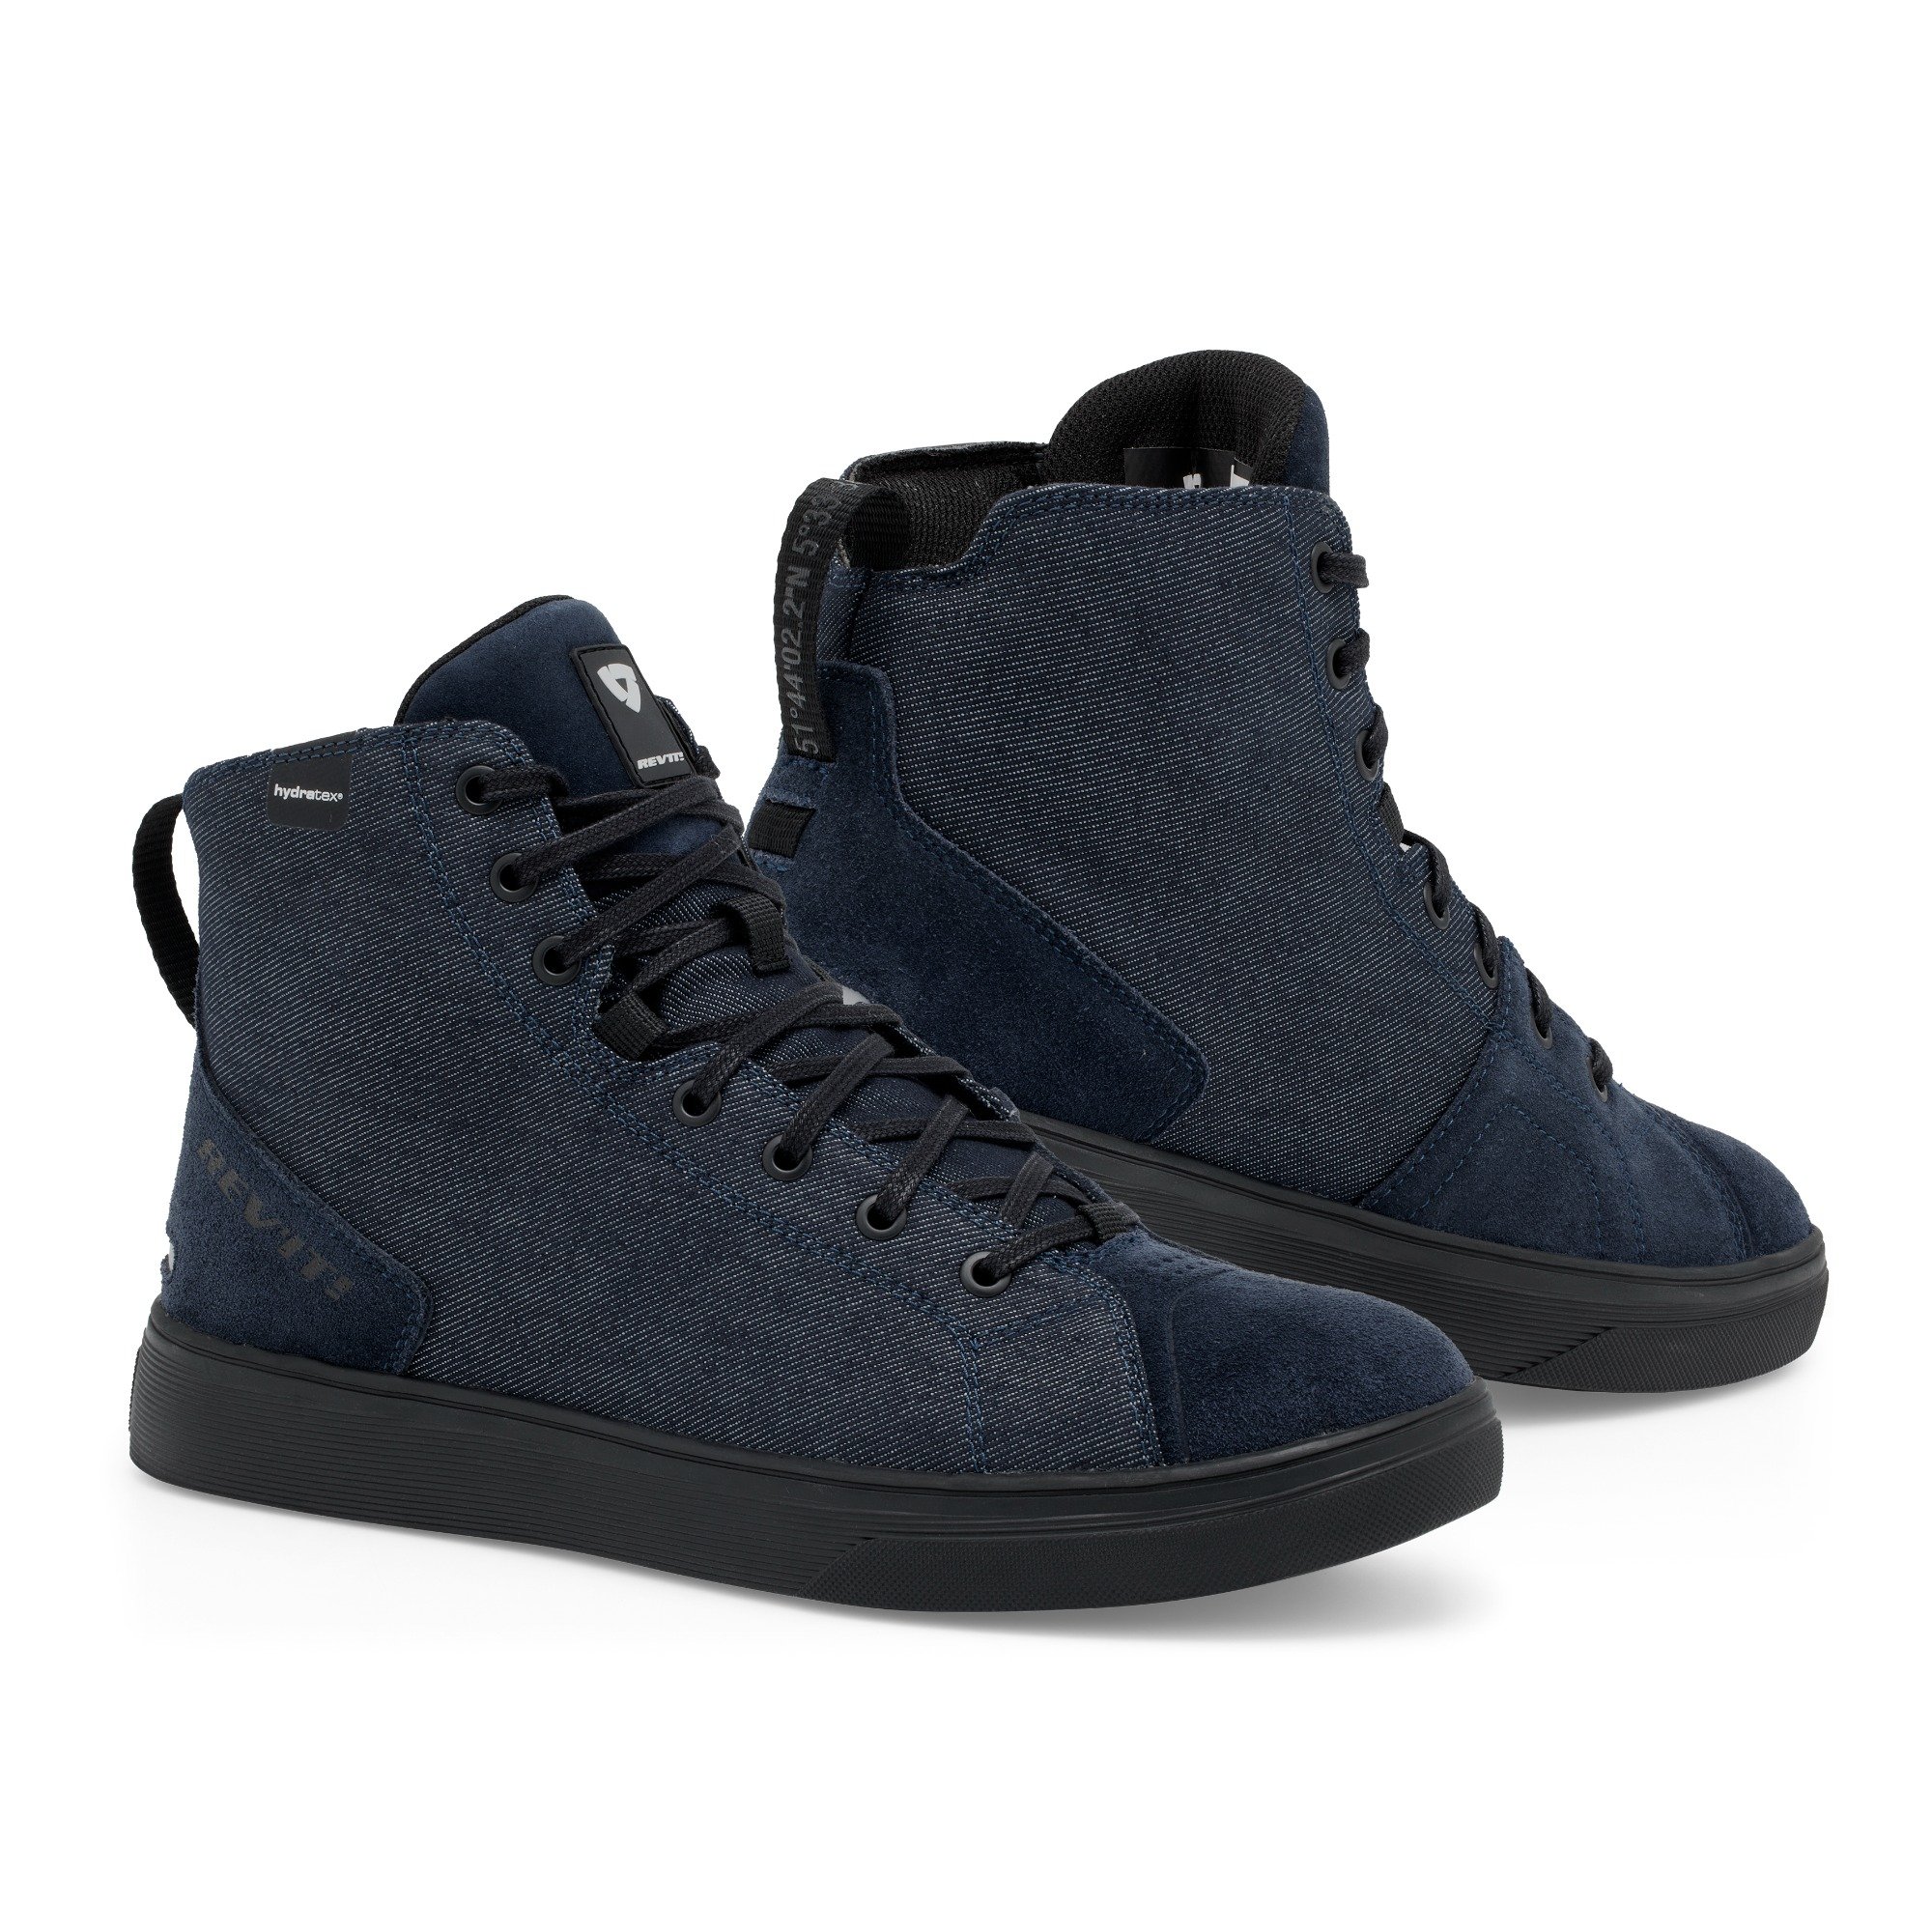 Image of REV'IT! Delta H2O Shoes Dark Blue Black Size 43 ID 8700001356466